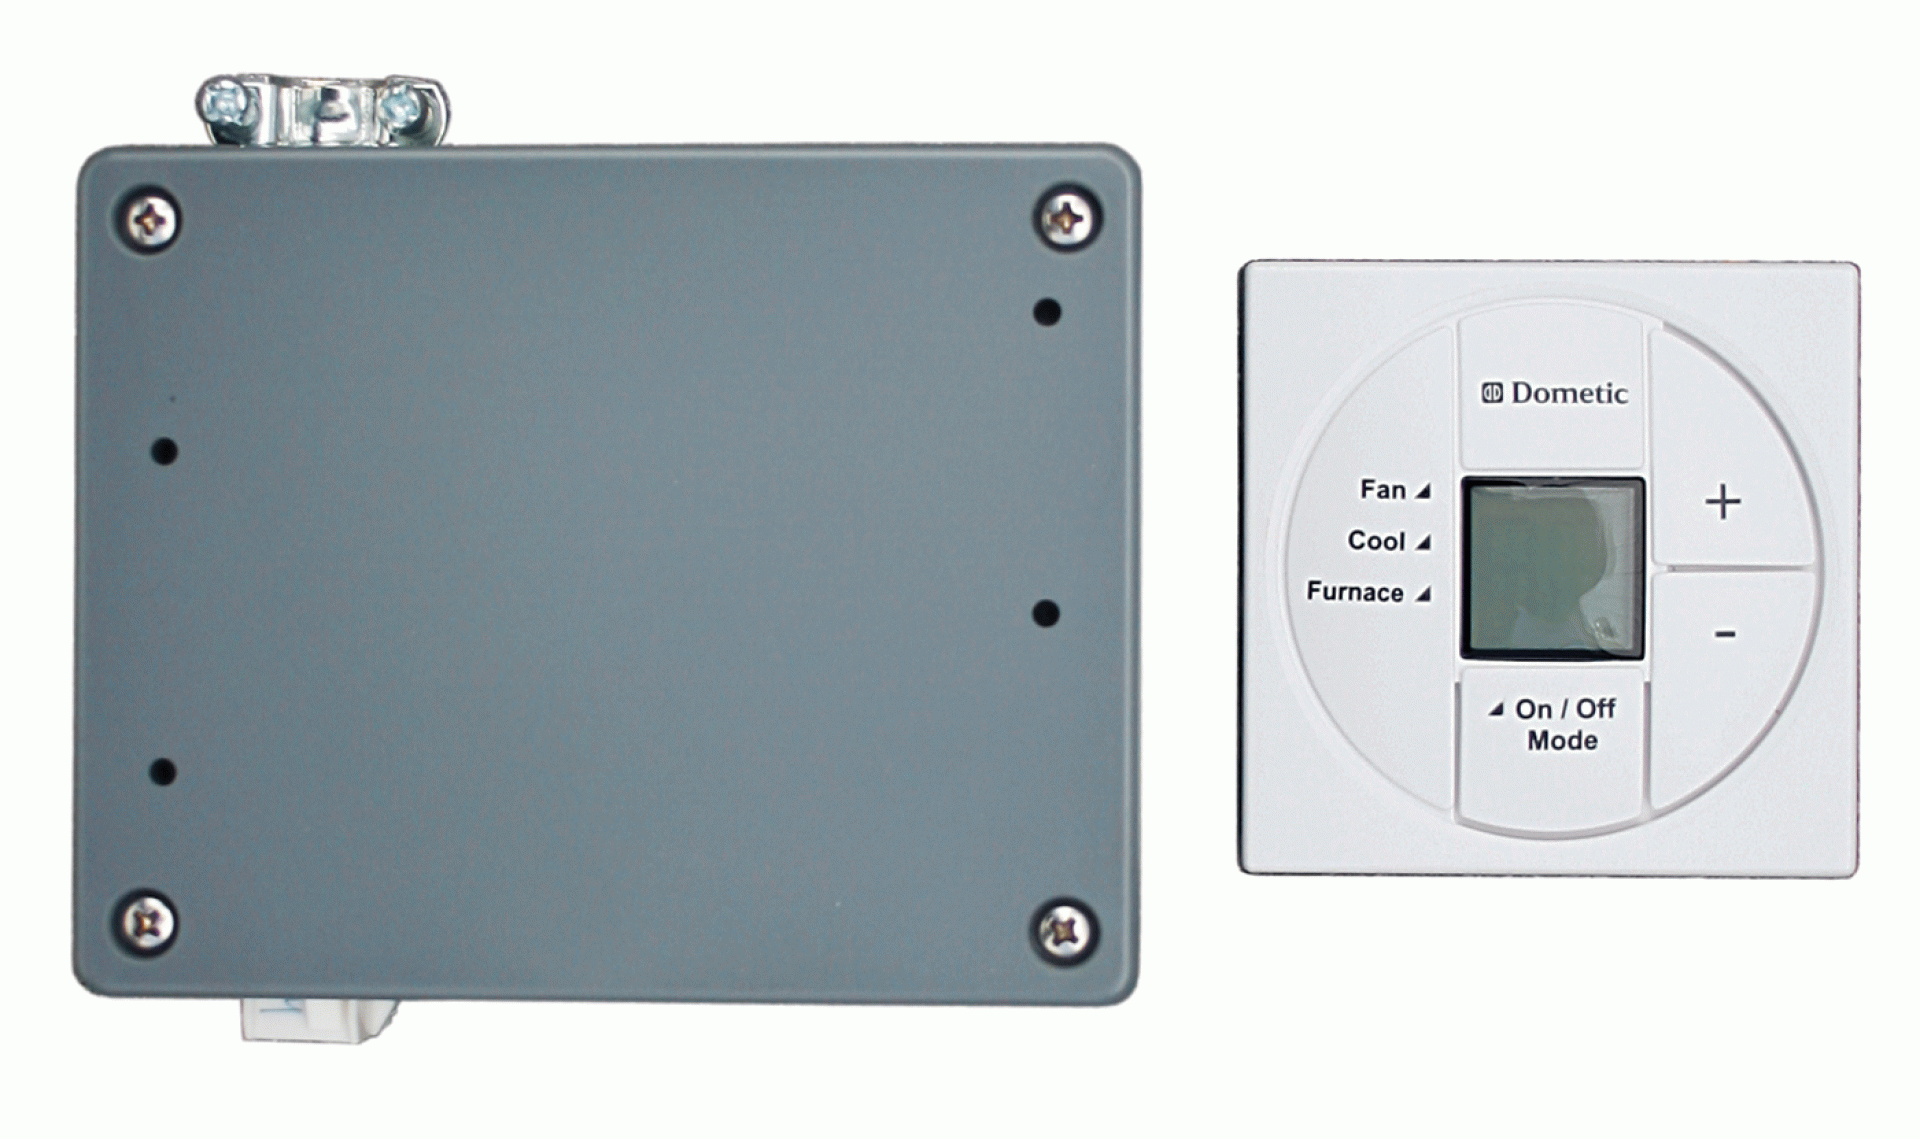 DOMETIC | 3313189.000 | SINGLE ZONE LCD WALL THERMOSTAT W/ CONTROL KIT - POLAR WHITE